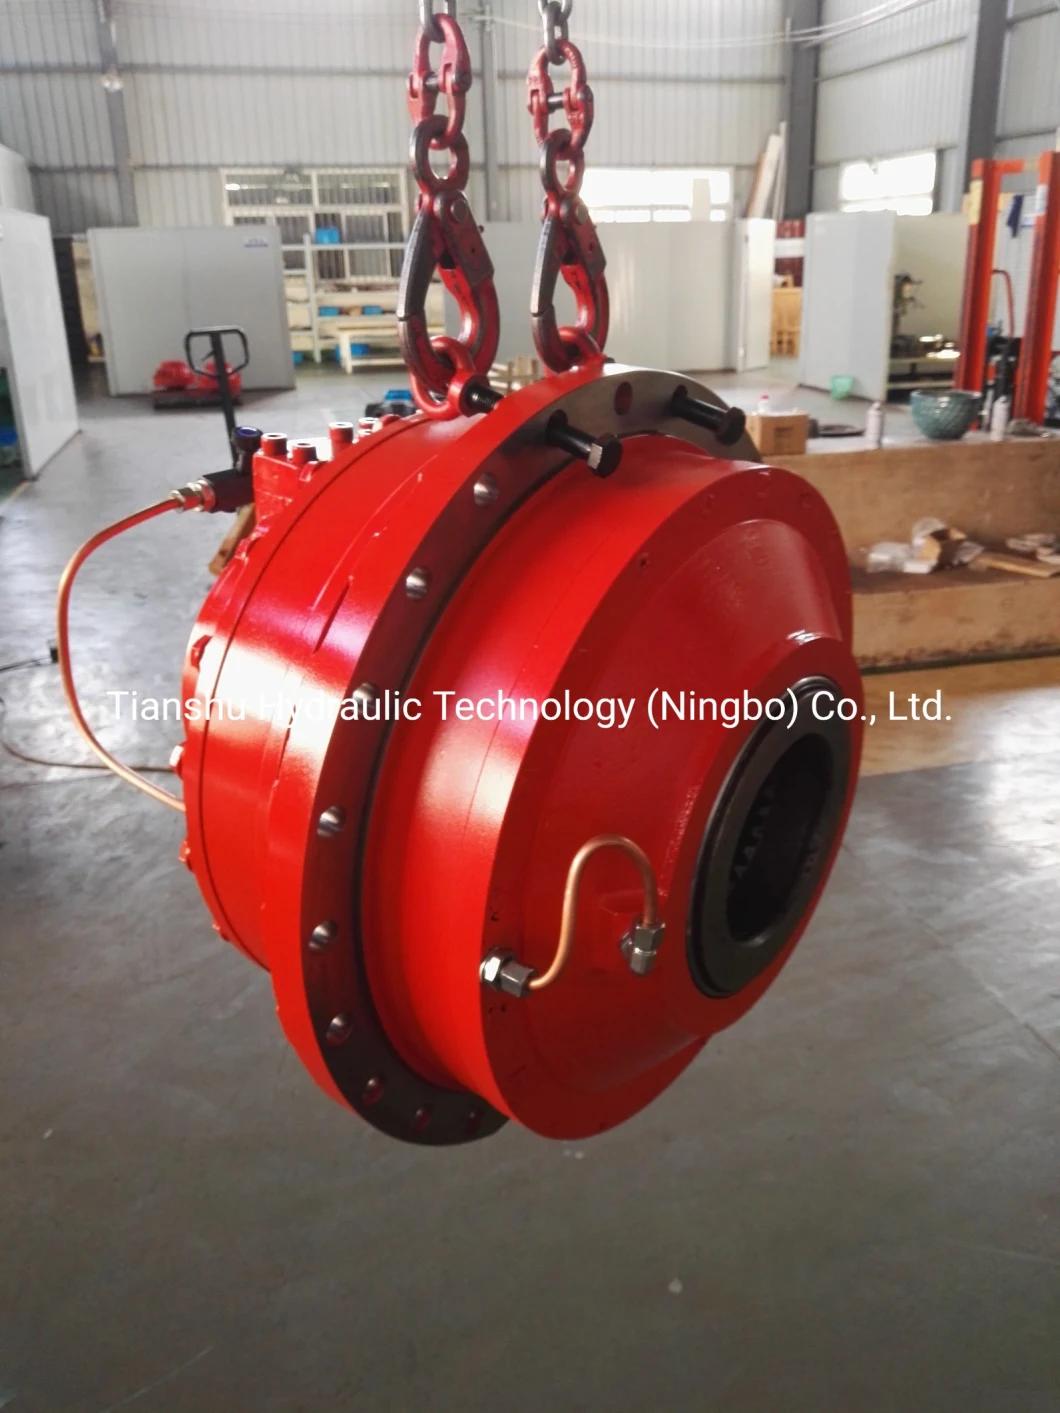 Rexroth Kawasaki Radial Piston Hagglunds Hydraulic Oil Pump for Ship Winch, Anchor Use